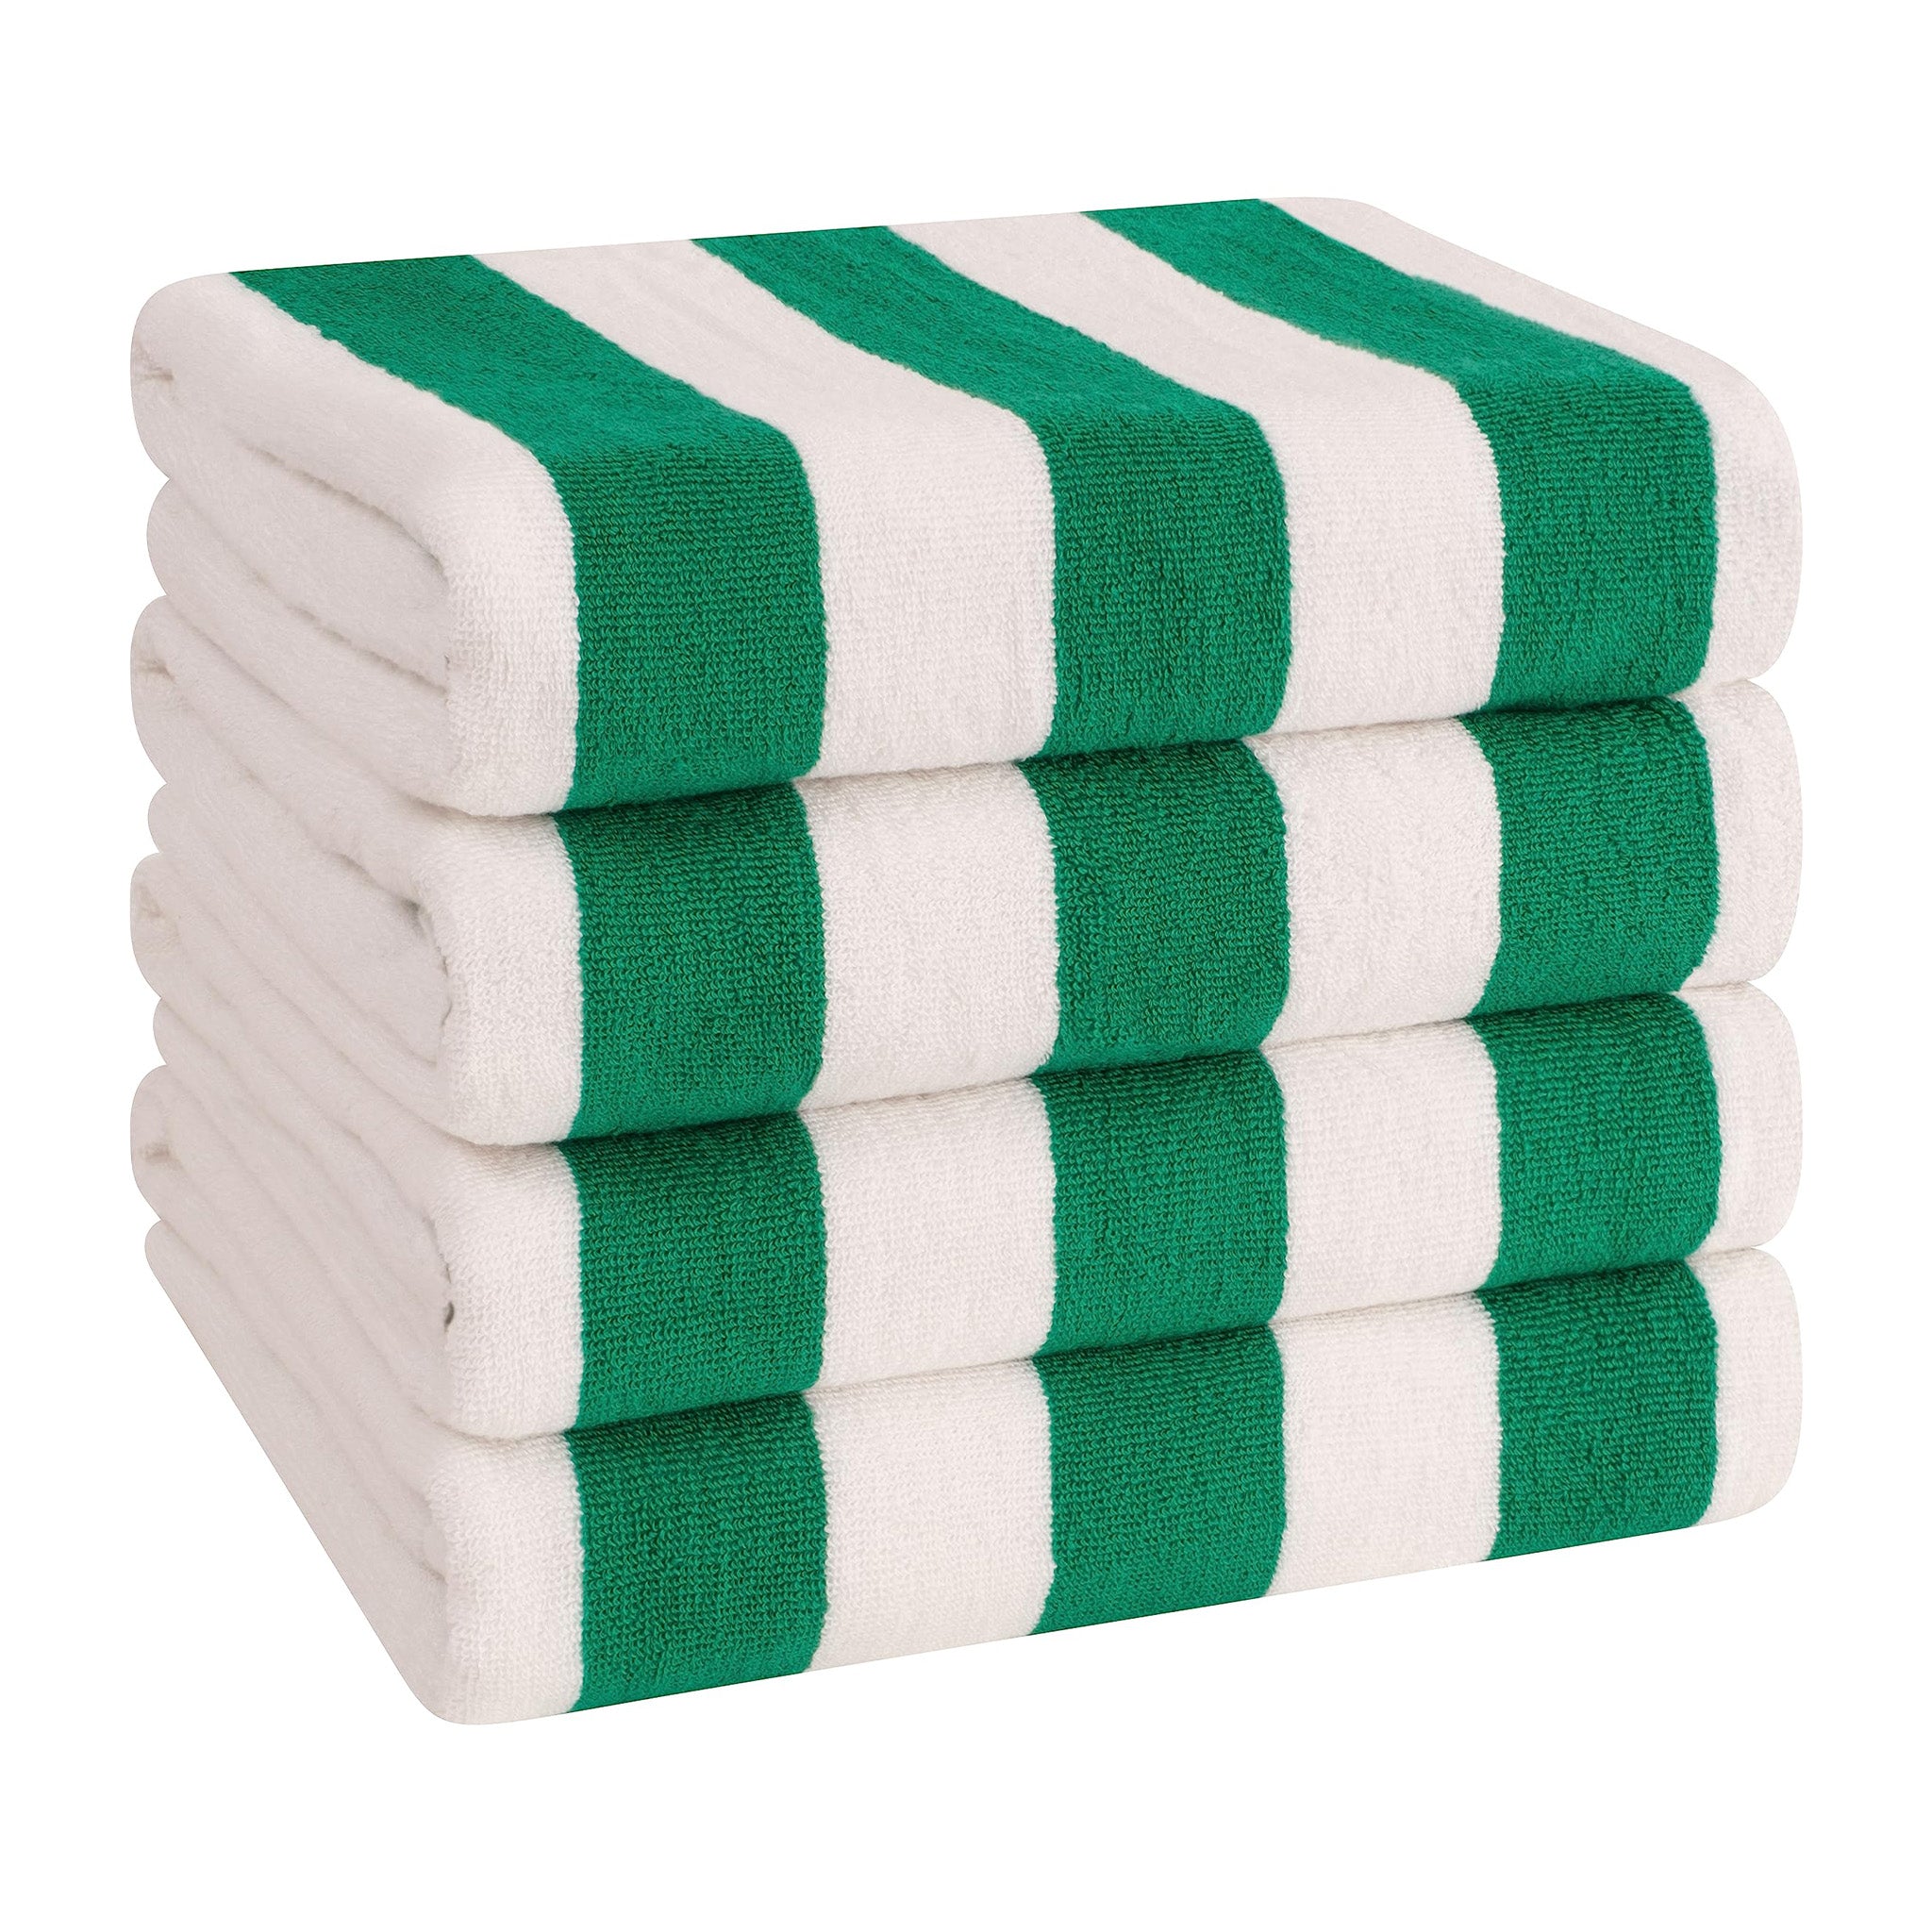 Striped 100% Cotton Lime Green Striped Pool Beach Bath Towel 75x150cm XL  Towels